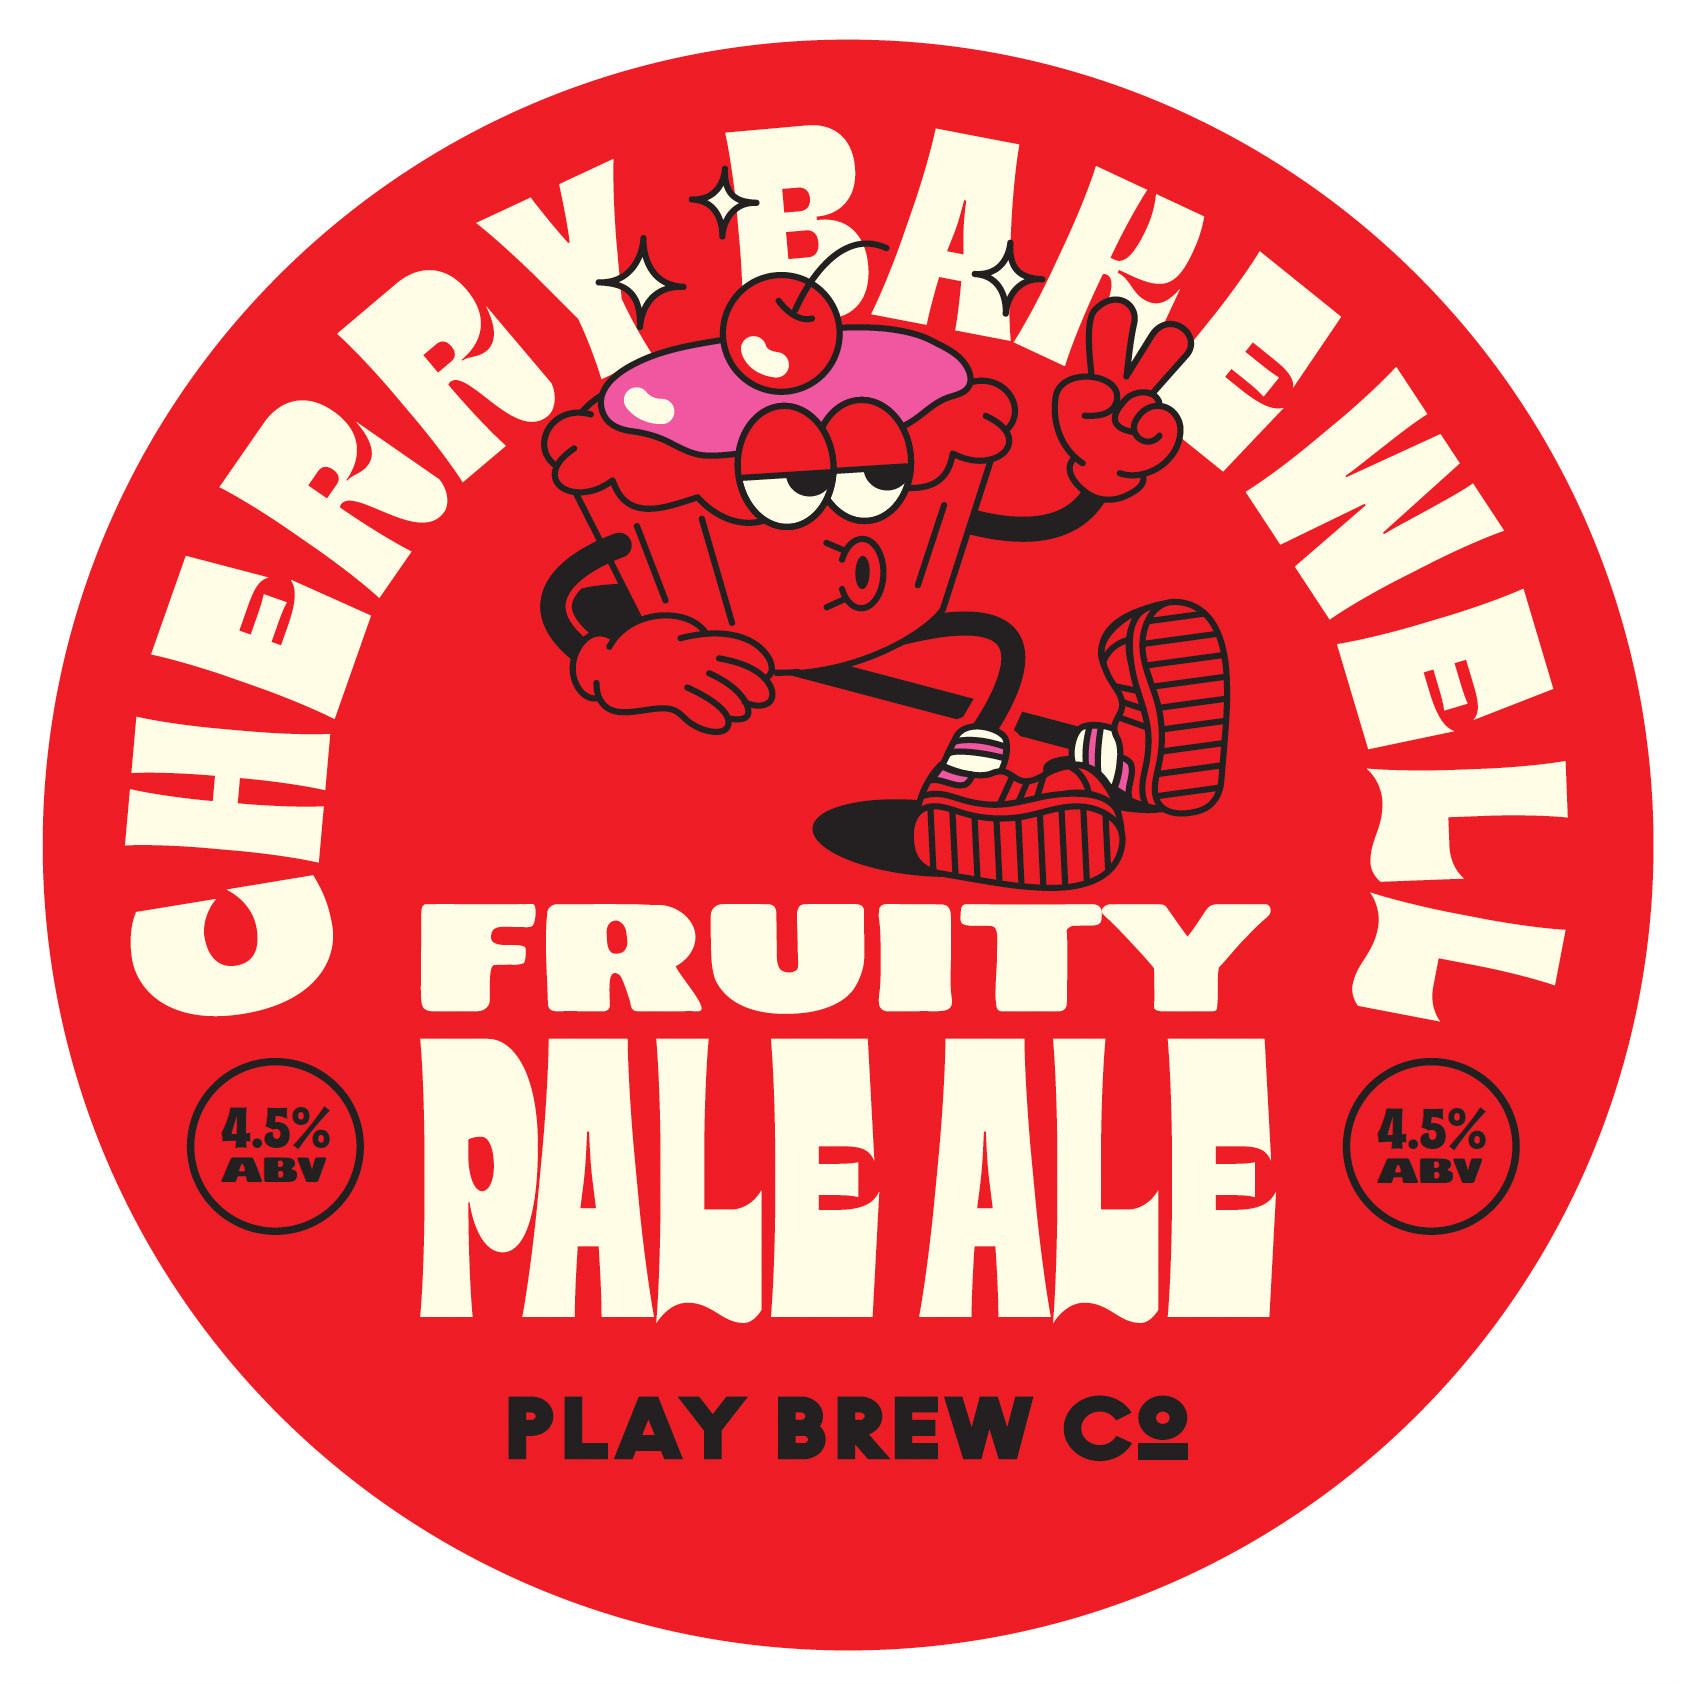 Play Cherry Bakewell Pale Ale 30L Keg